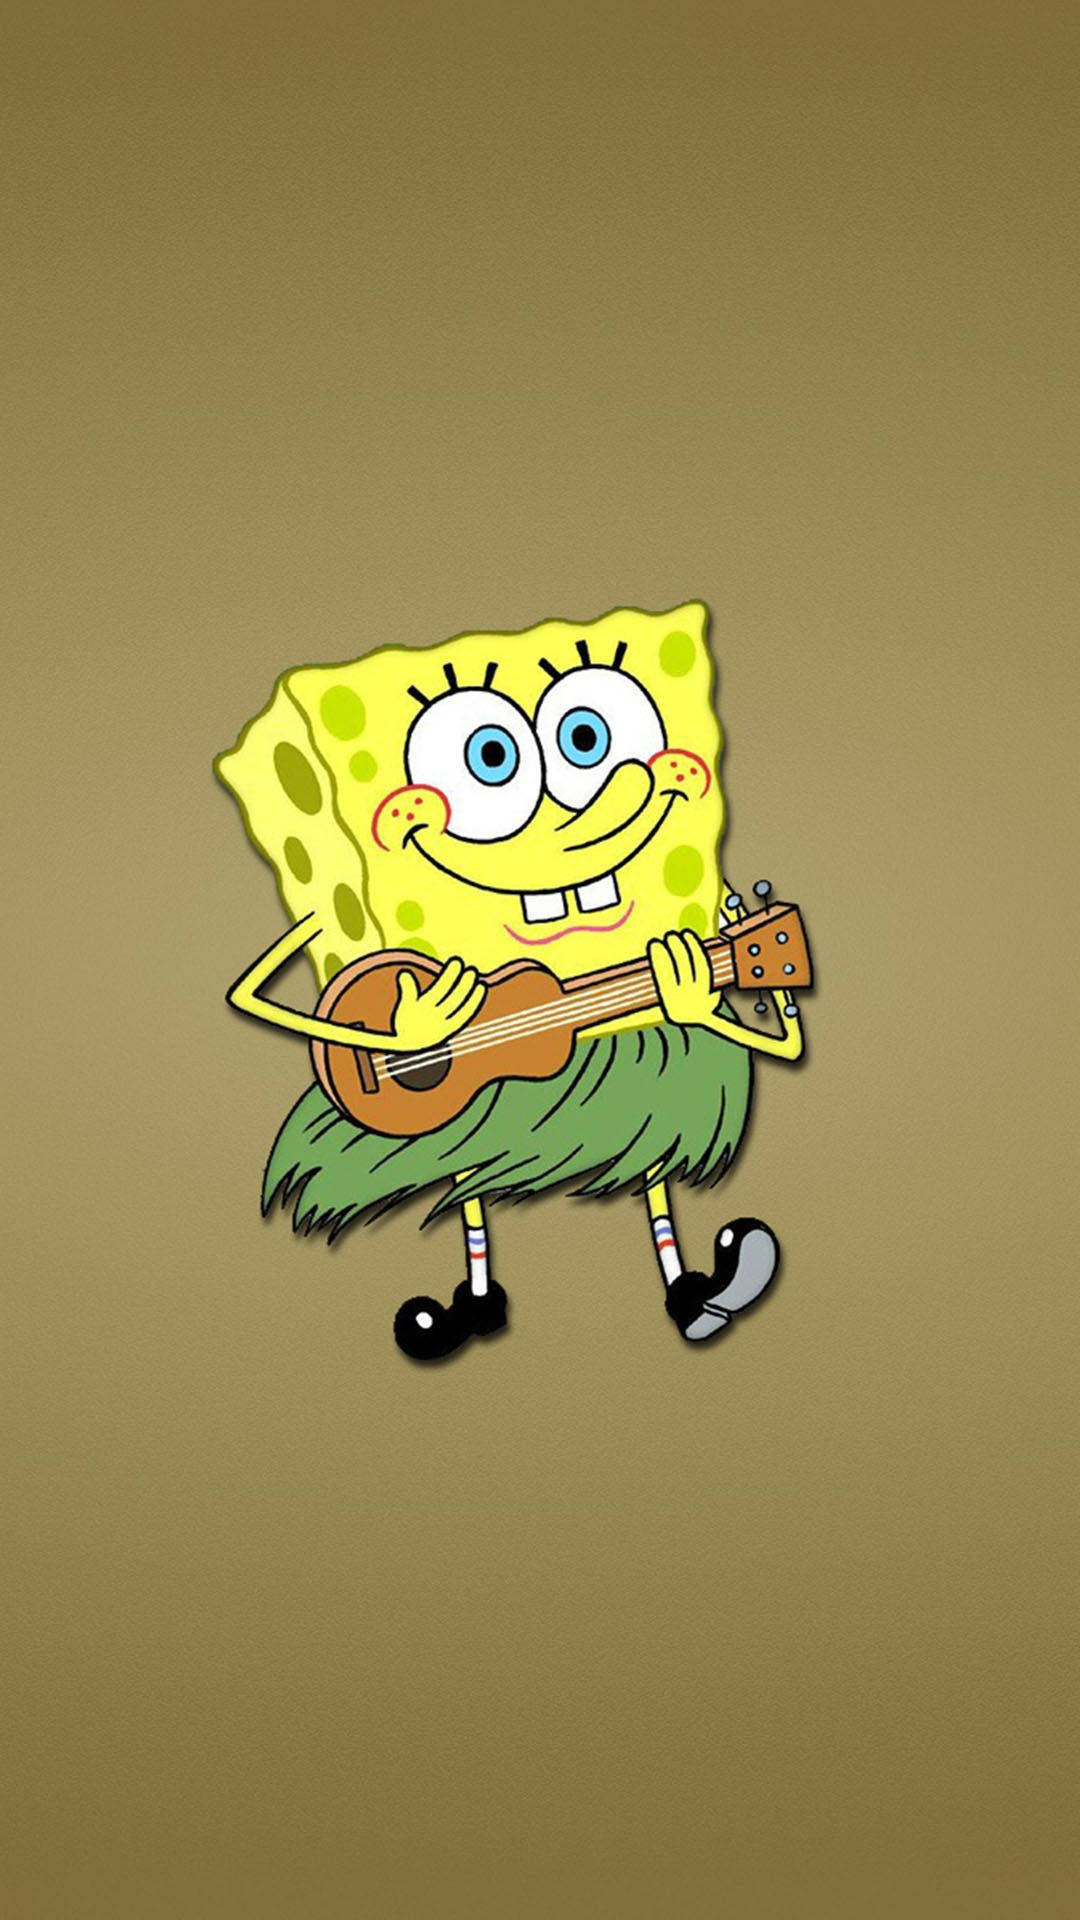 Funny Spongebob In A Grass Skirt Background